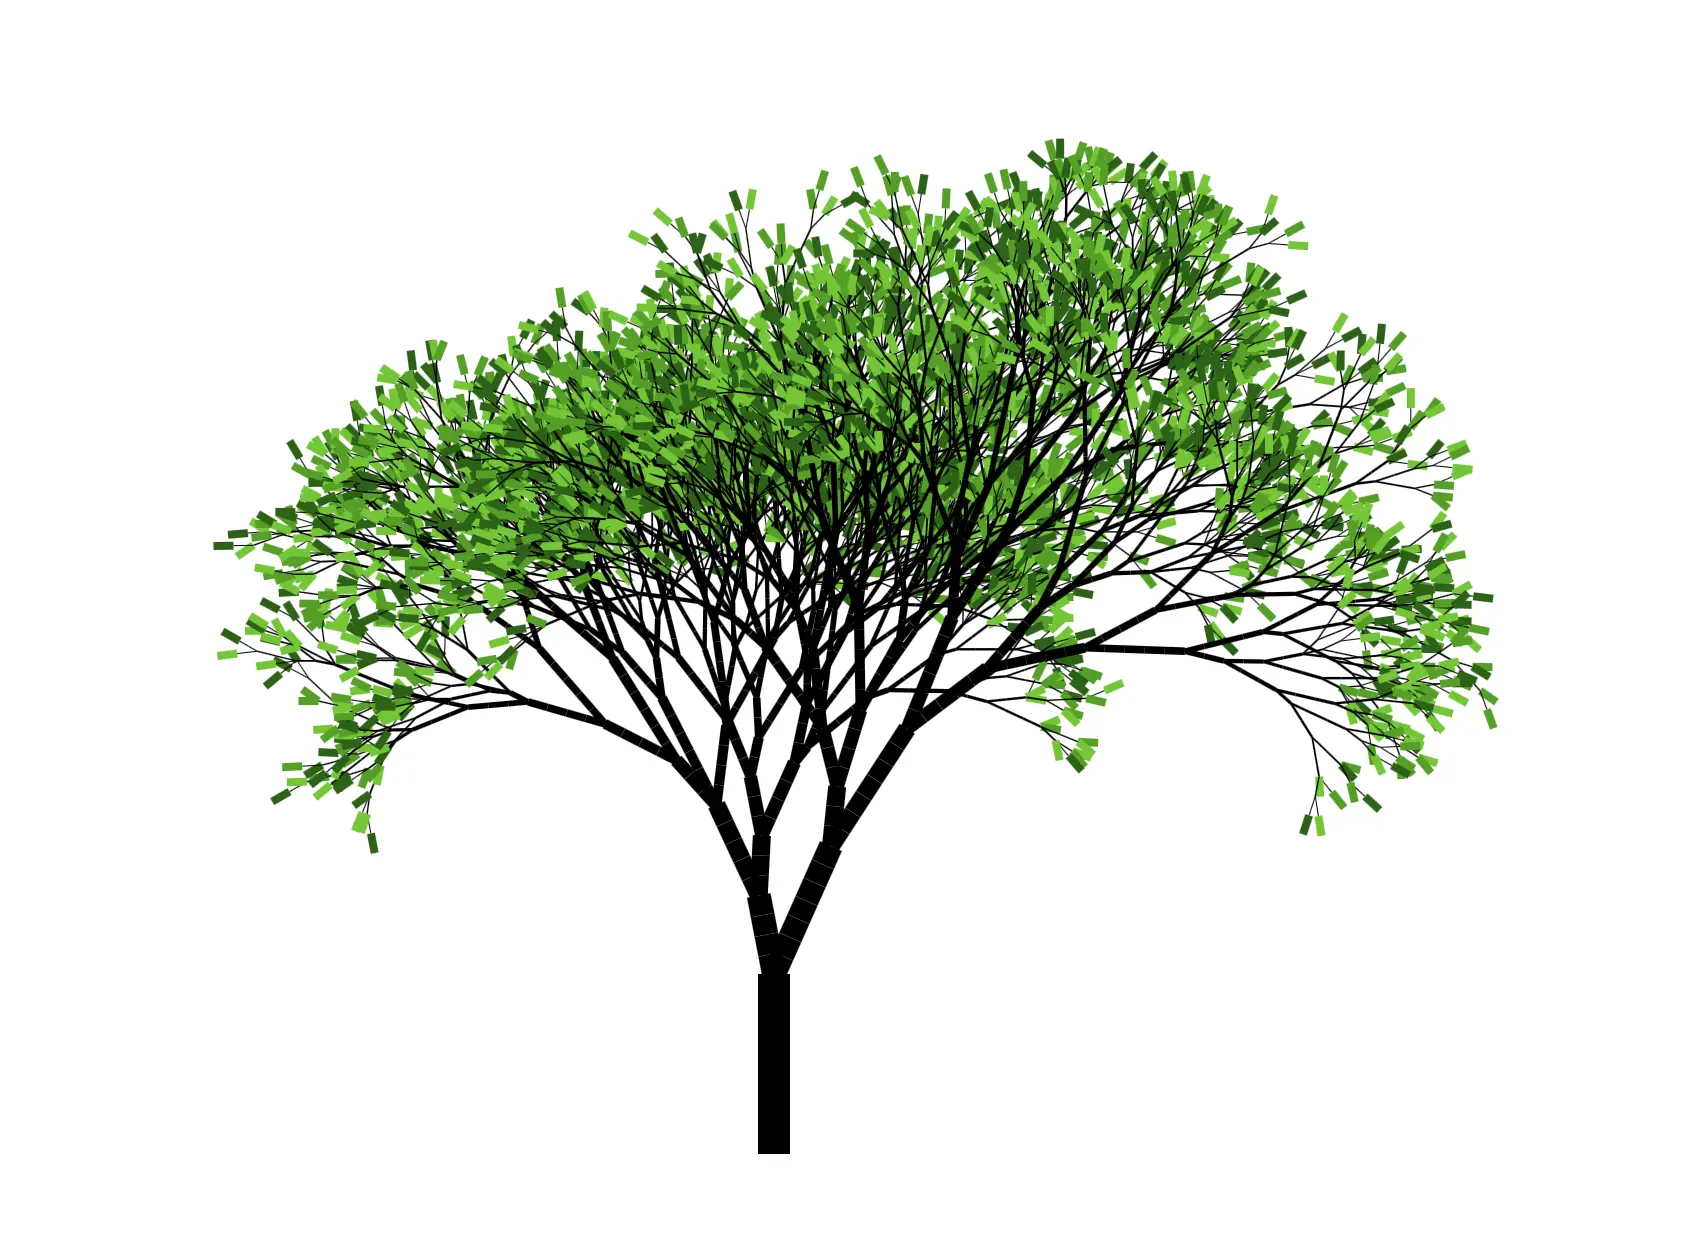 Generated tree image